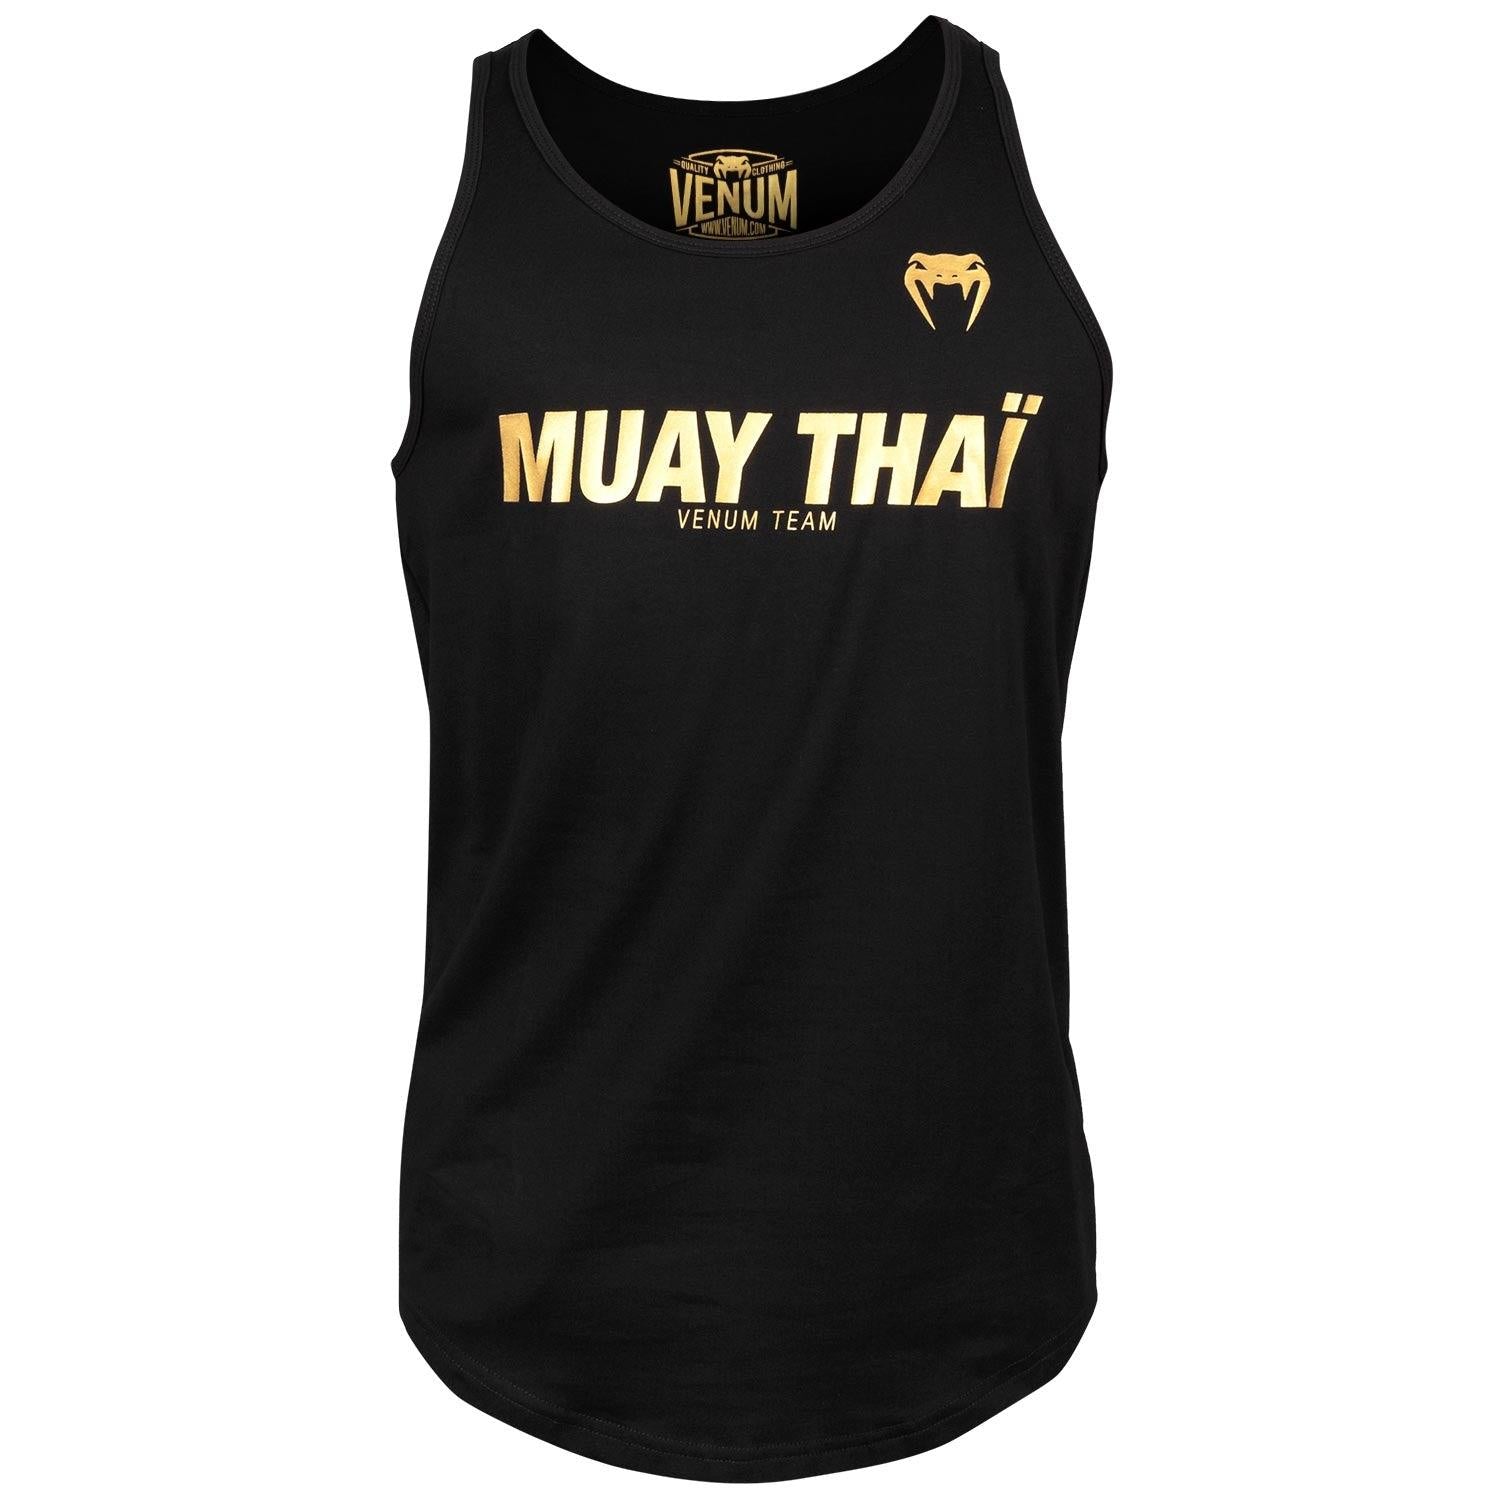 Venum Muay Thai VT Tank Top - Black/Gold Picture 1